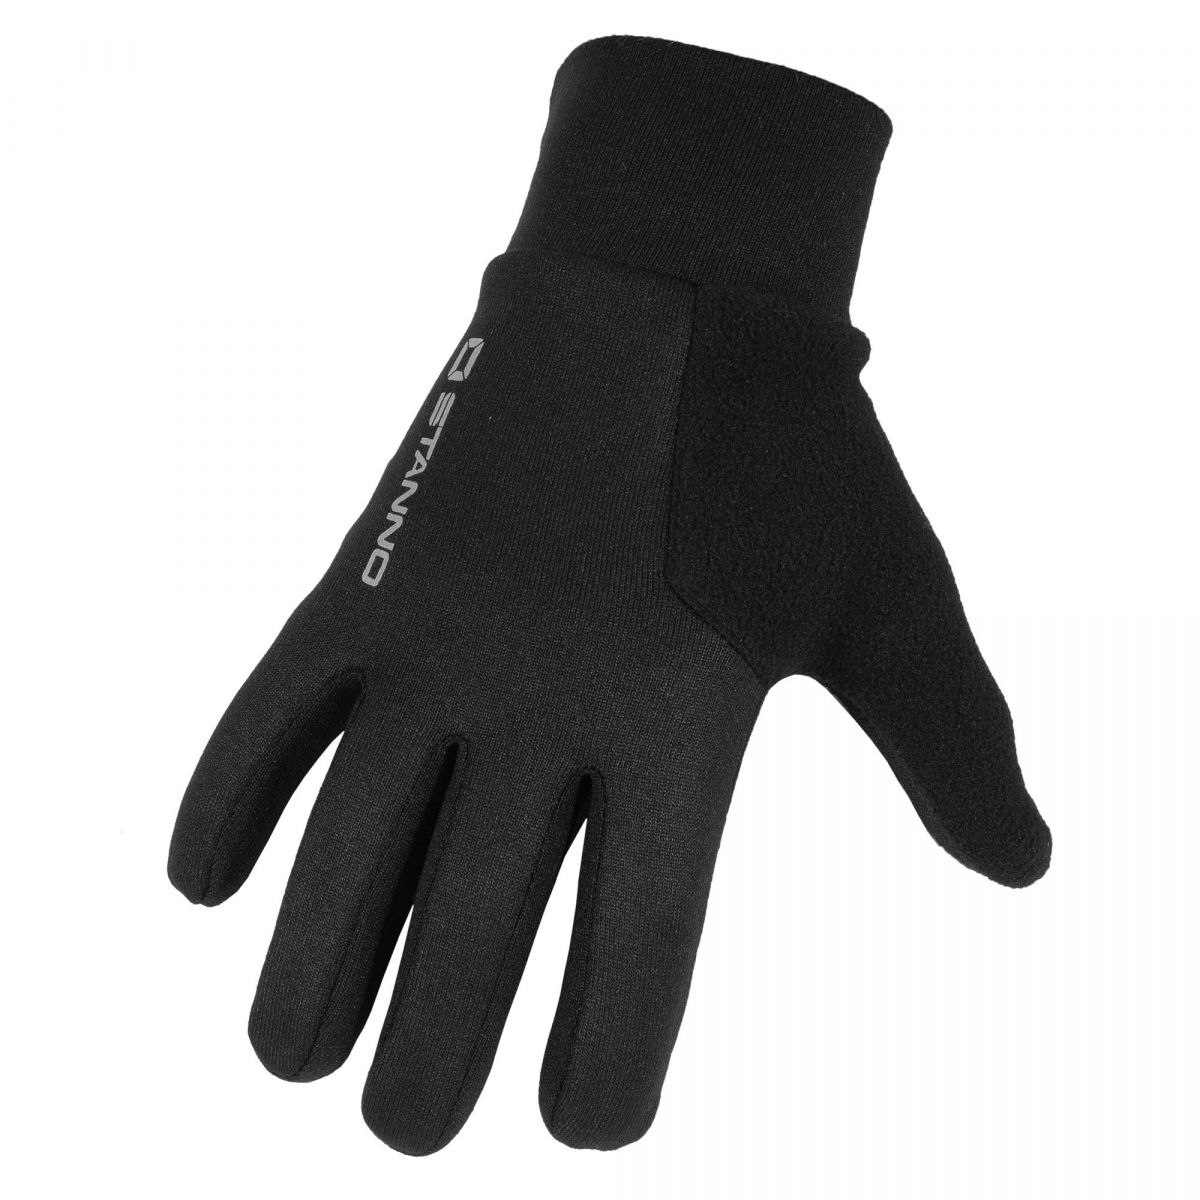 OBK Player Glove II Handskar